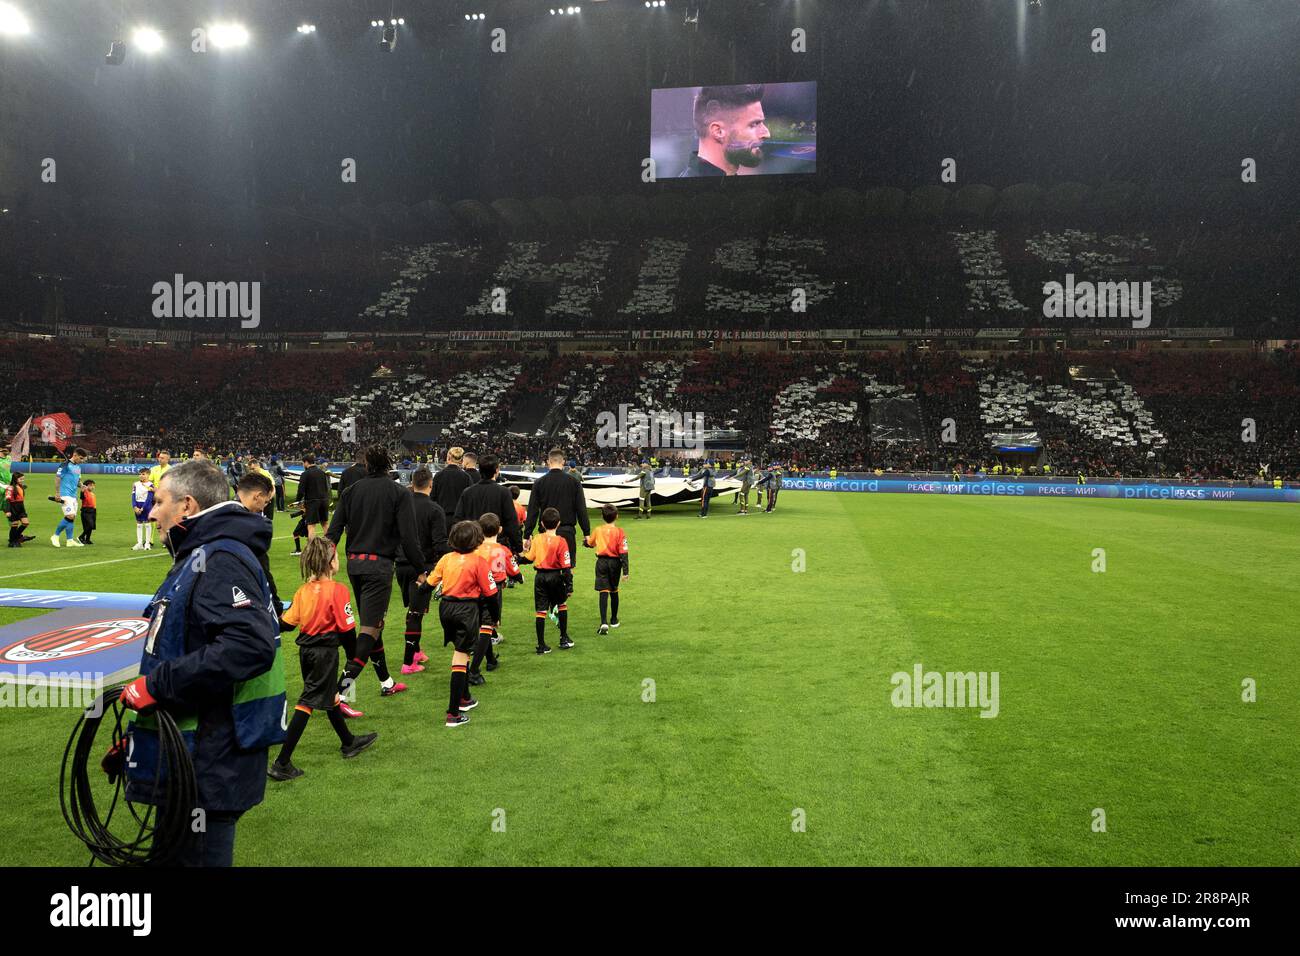 Football players enter the San Siro's stadium pitch, during the UEFA Champions League match AC Milan vs Napoli Stock Photo